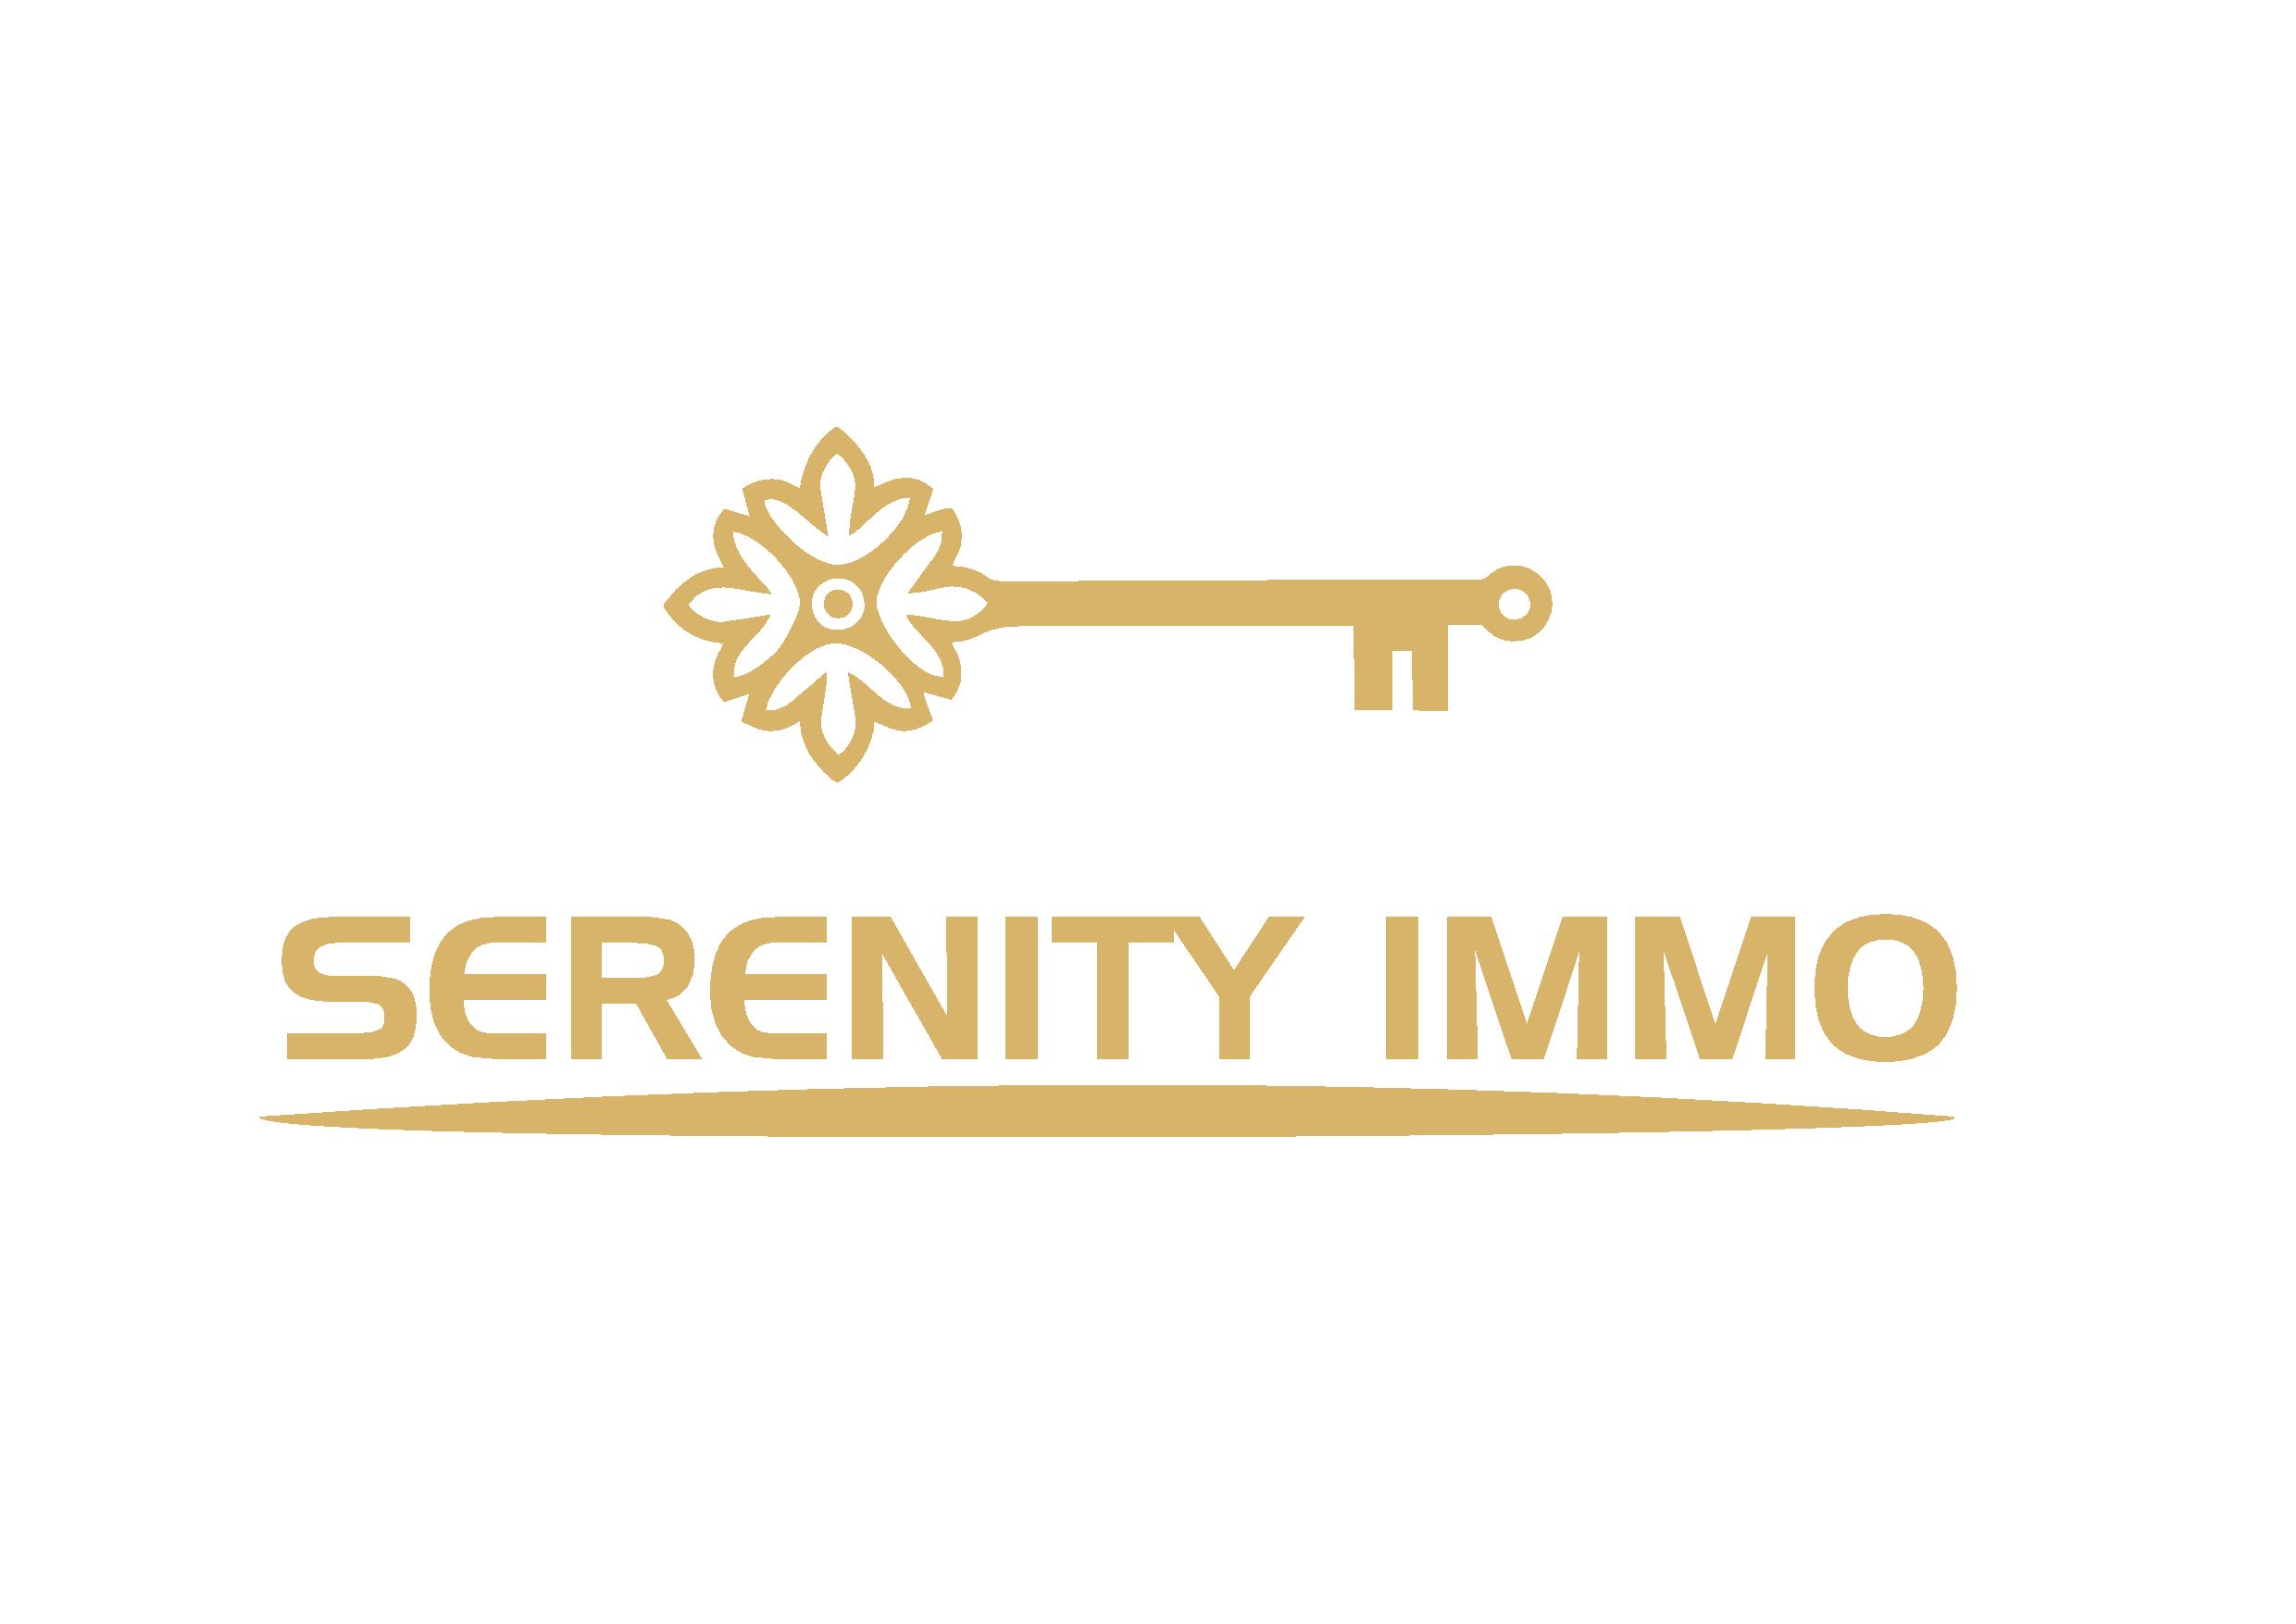 Serenity Immo